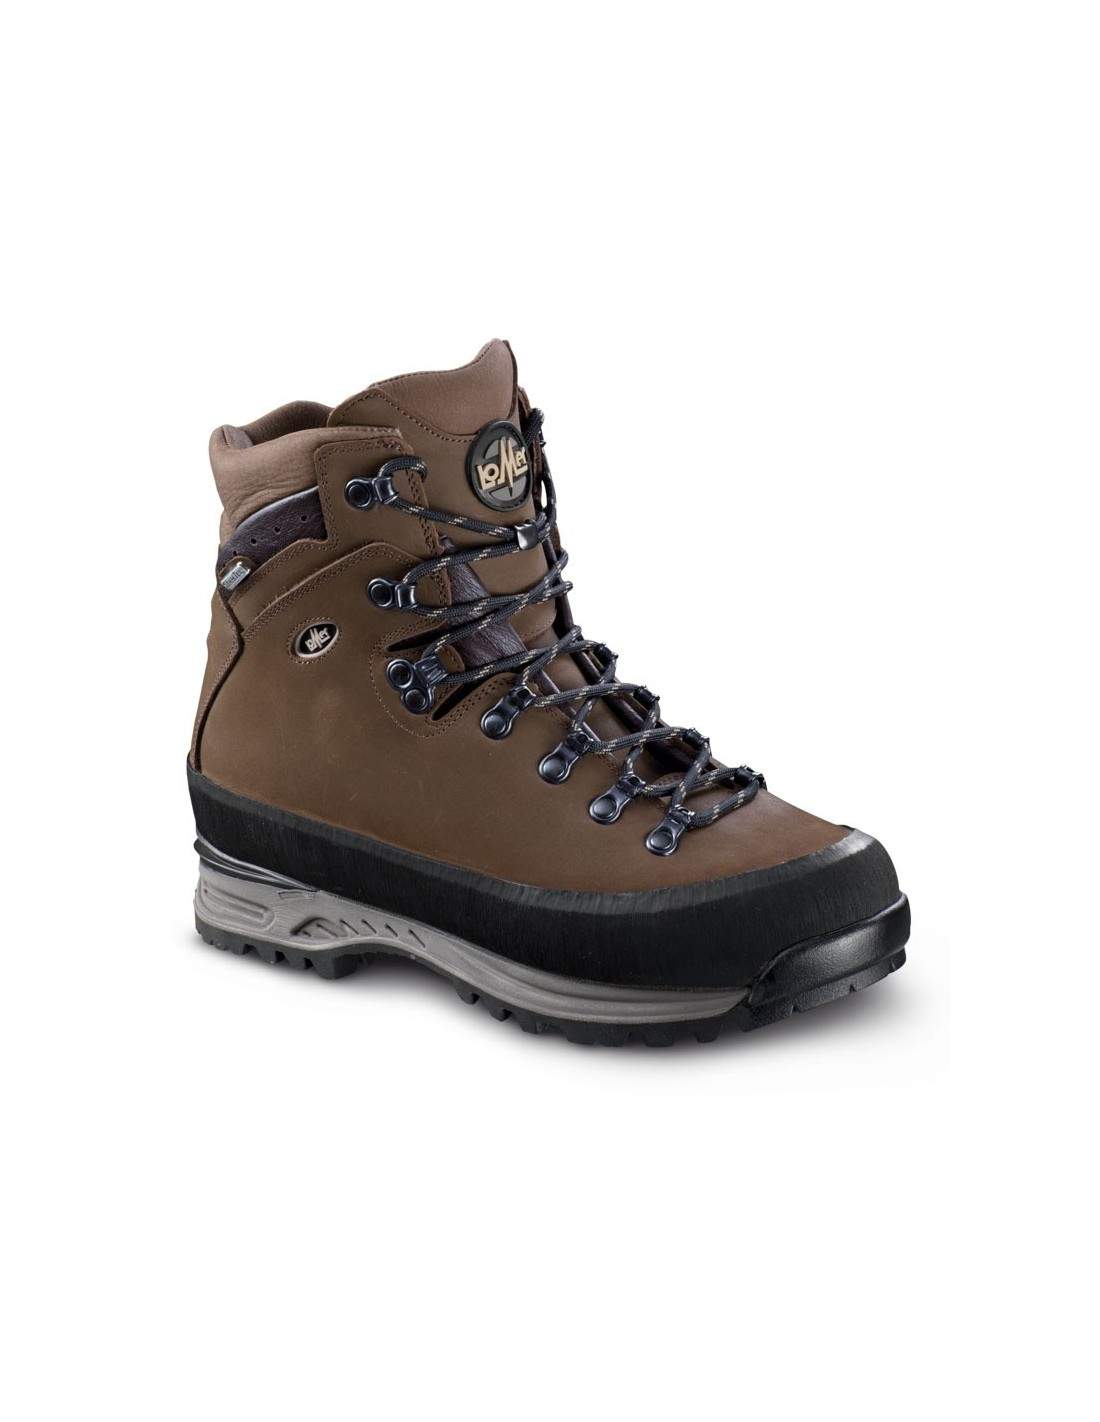 Hiking boots LOMER PELMO LTH/STX TD trekking - VertSport